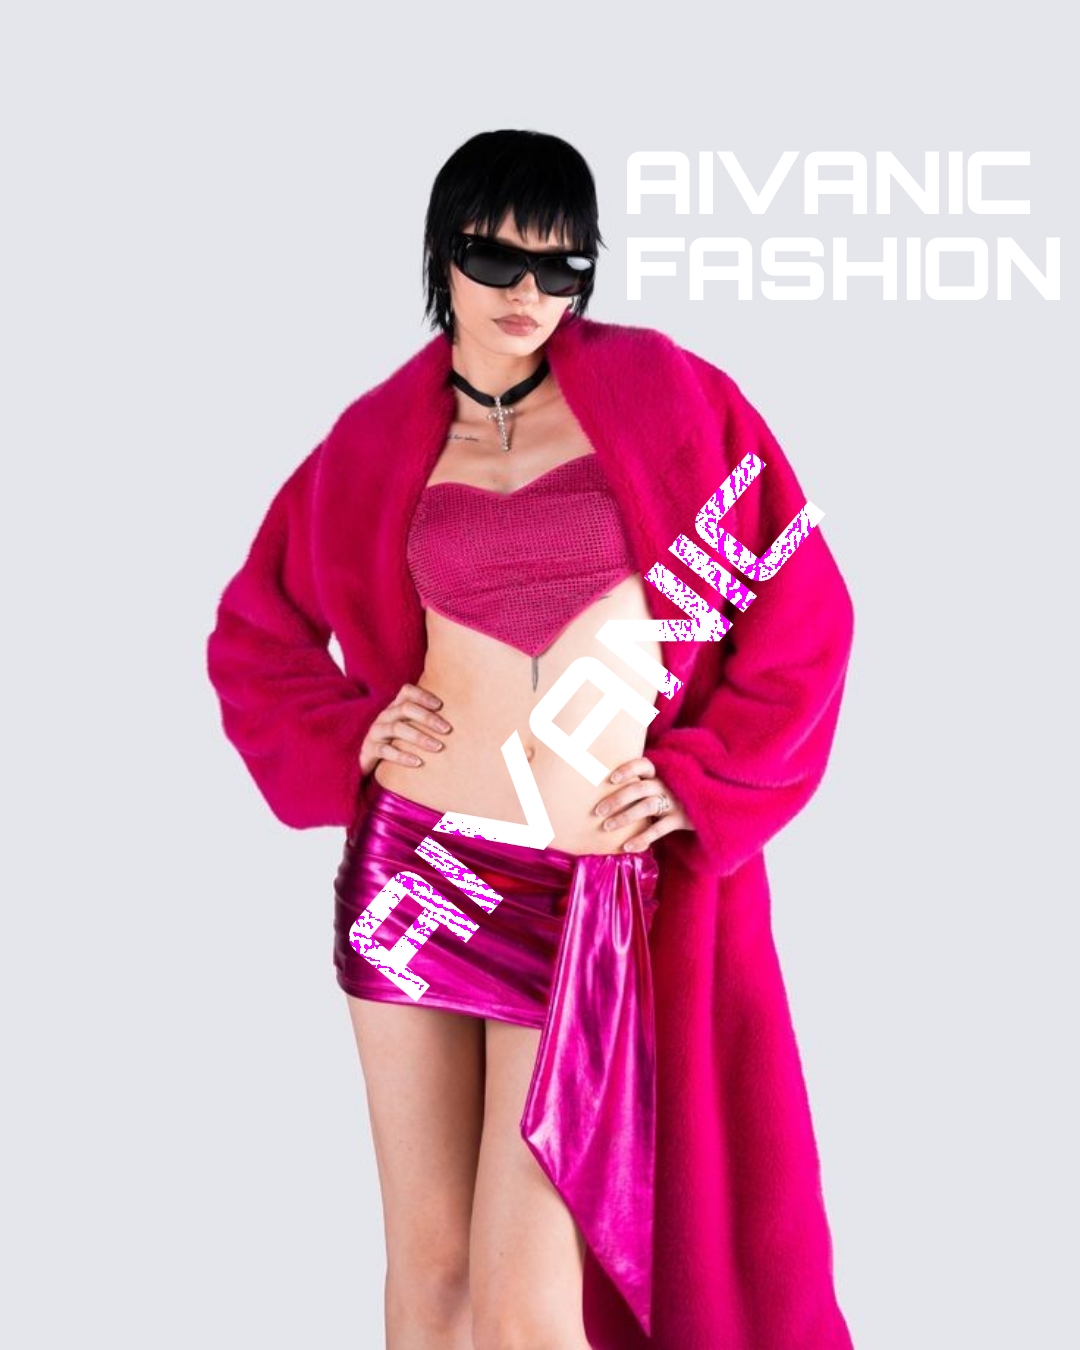 aivanic fashion